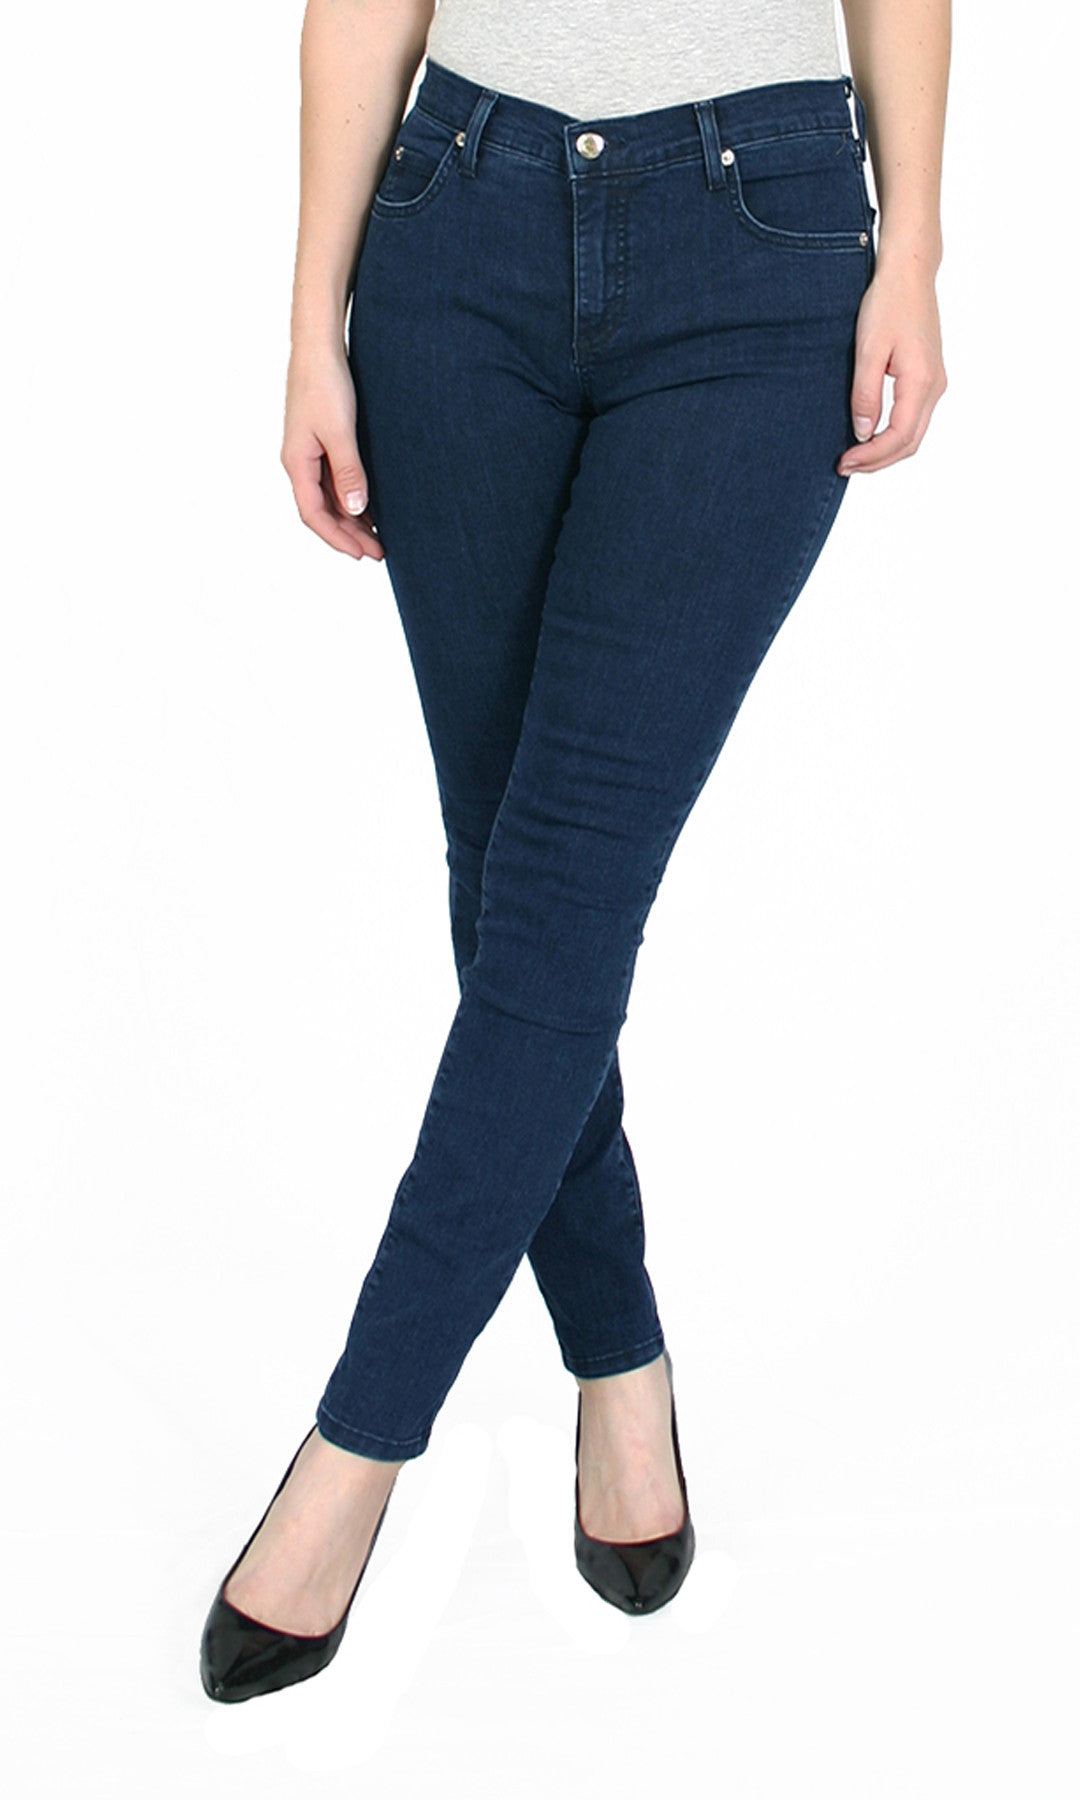 Wholesale Womens Skinny Denim Look Leggings Slim Fit Faux Denim Look Jeans  With Stretchy Pants From Edwiin04, $17.56 | DHgate.Com